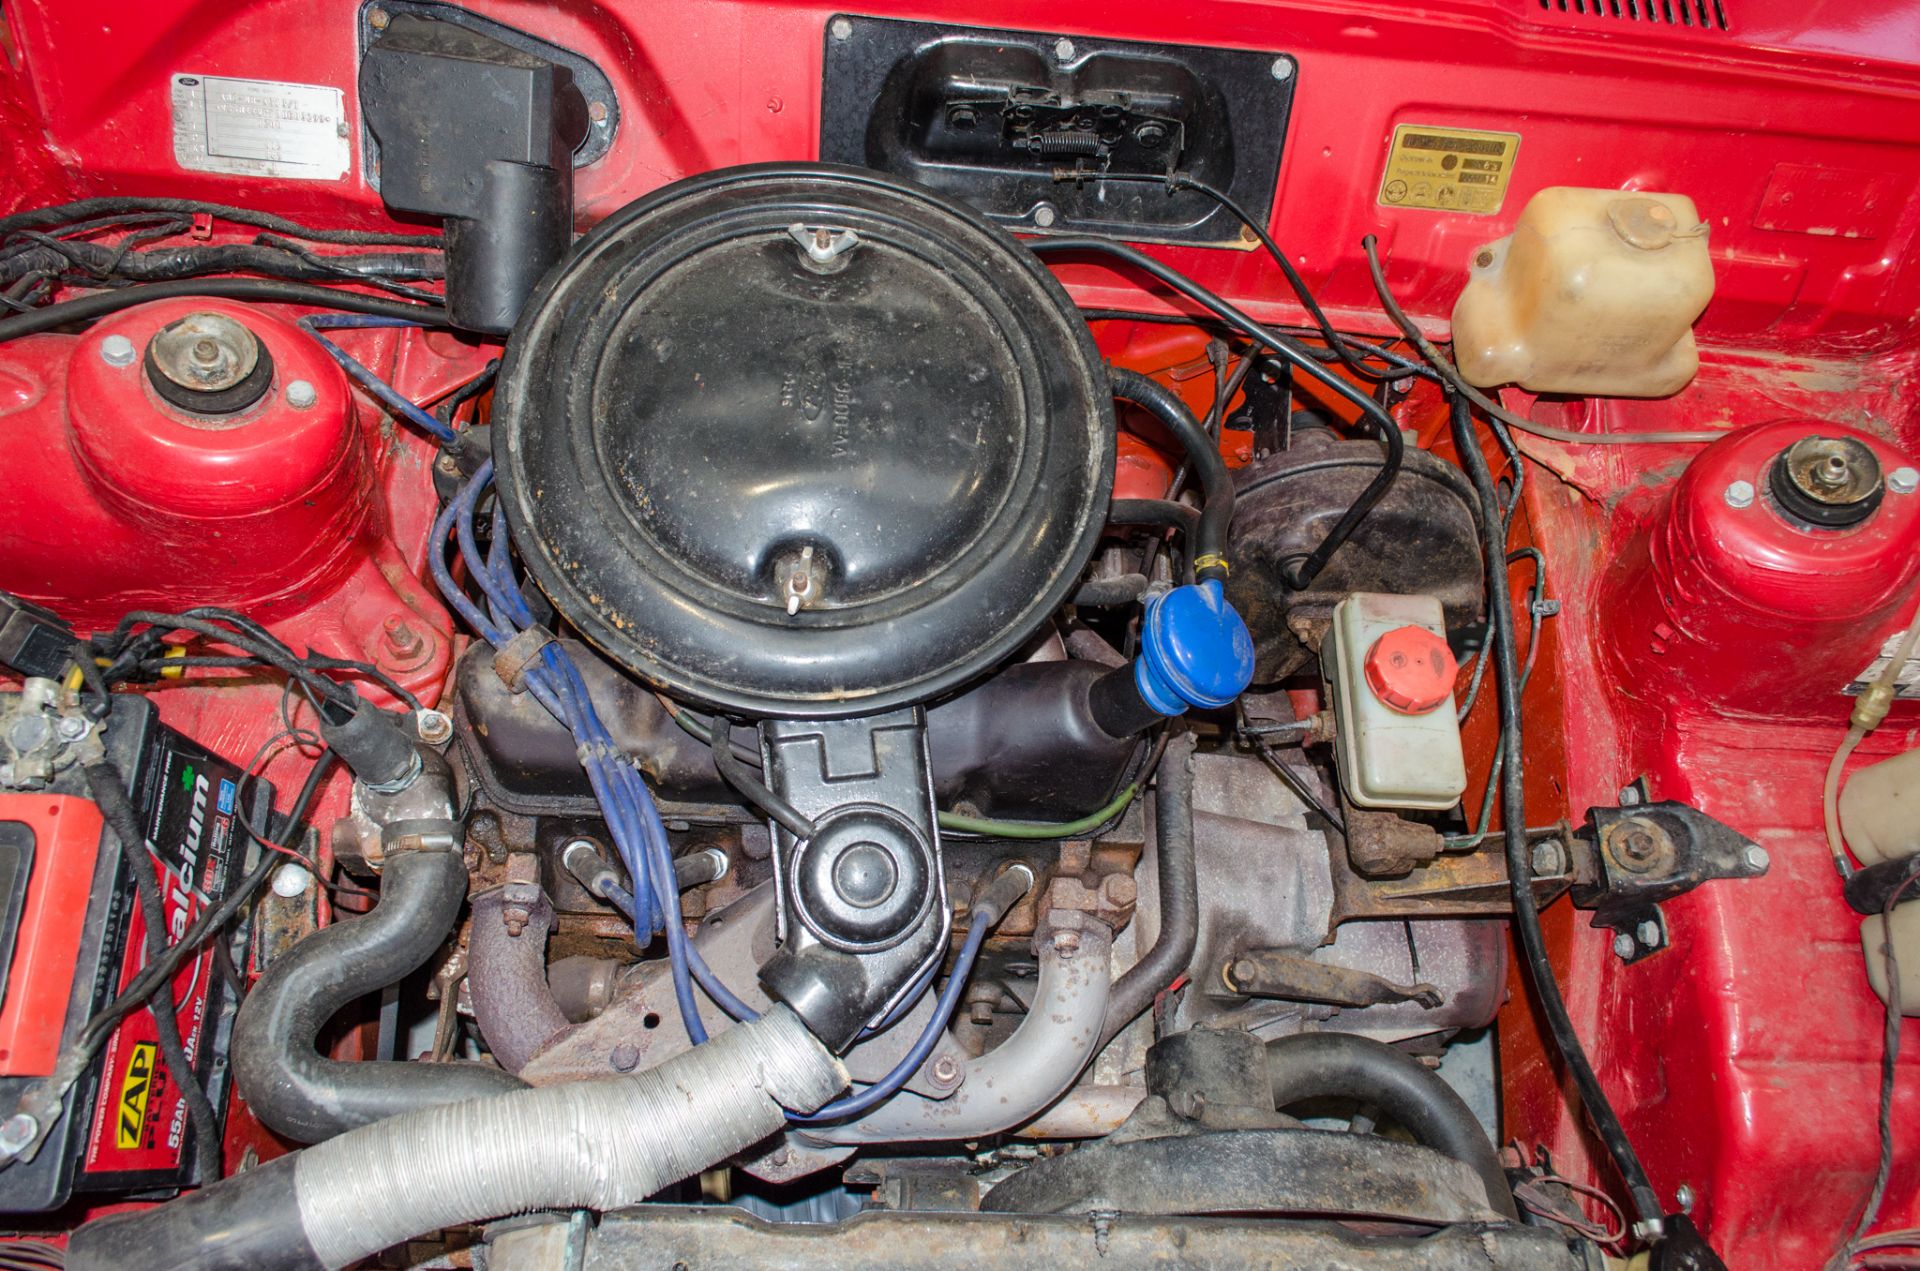 1983 Ford Fiesta XR2 1600cc 3 door hatchback - Image 42 of 47